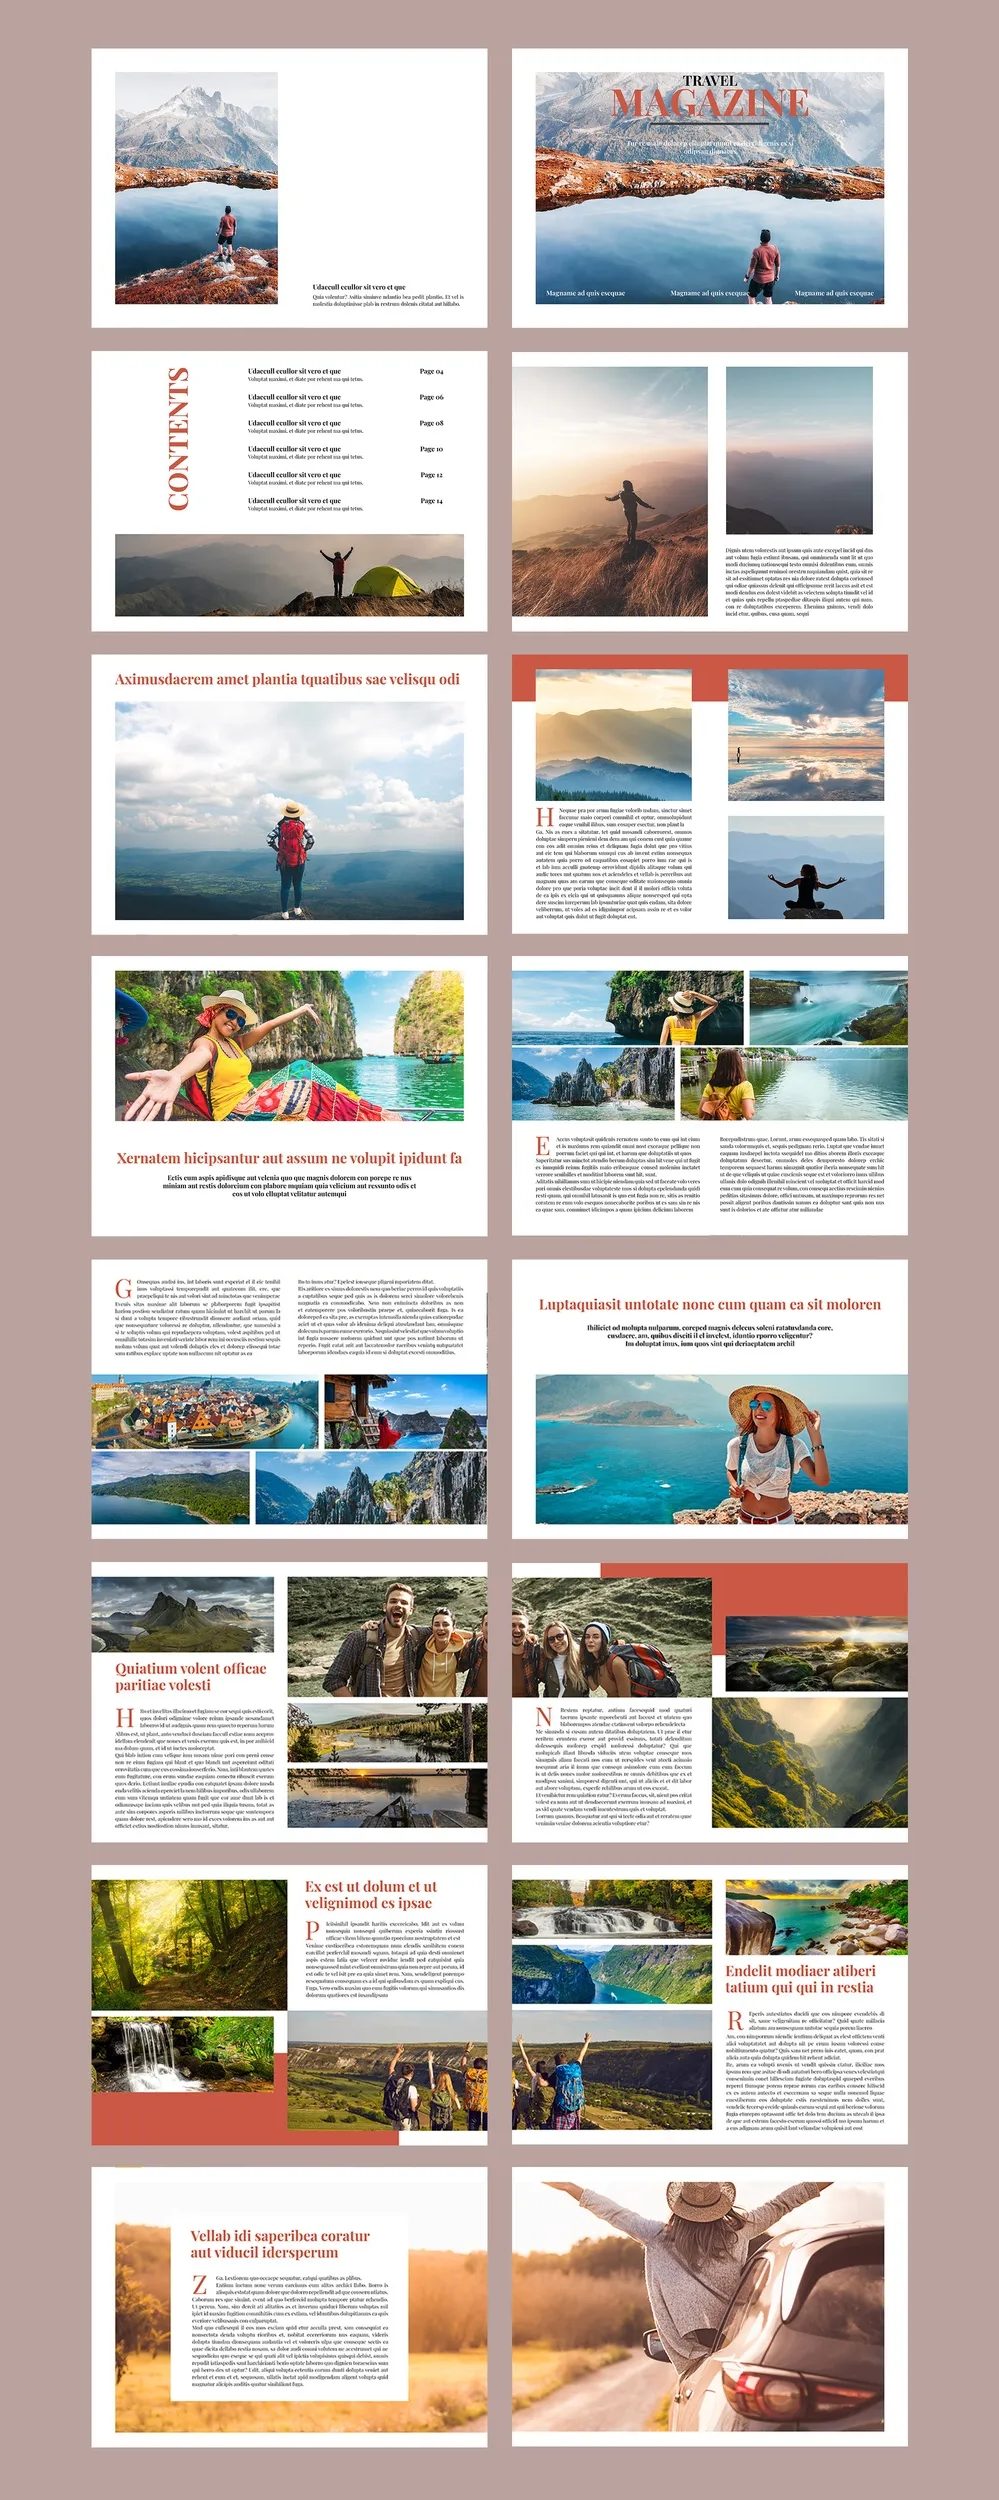 Adobestock - Travel Magazine Landscape 714744164